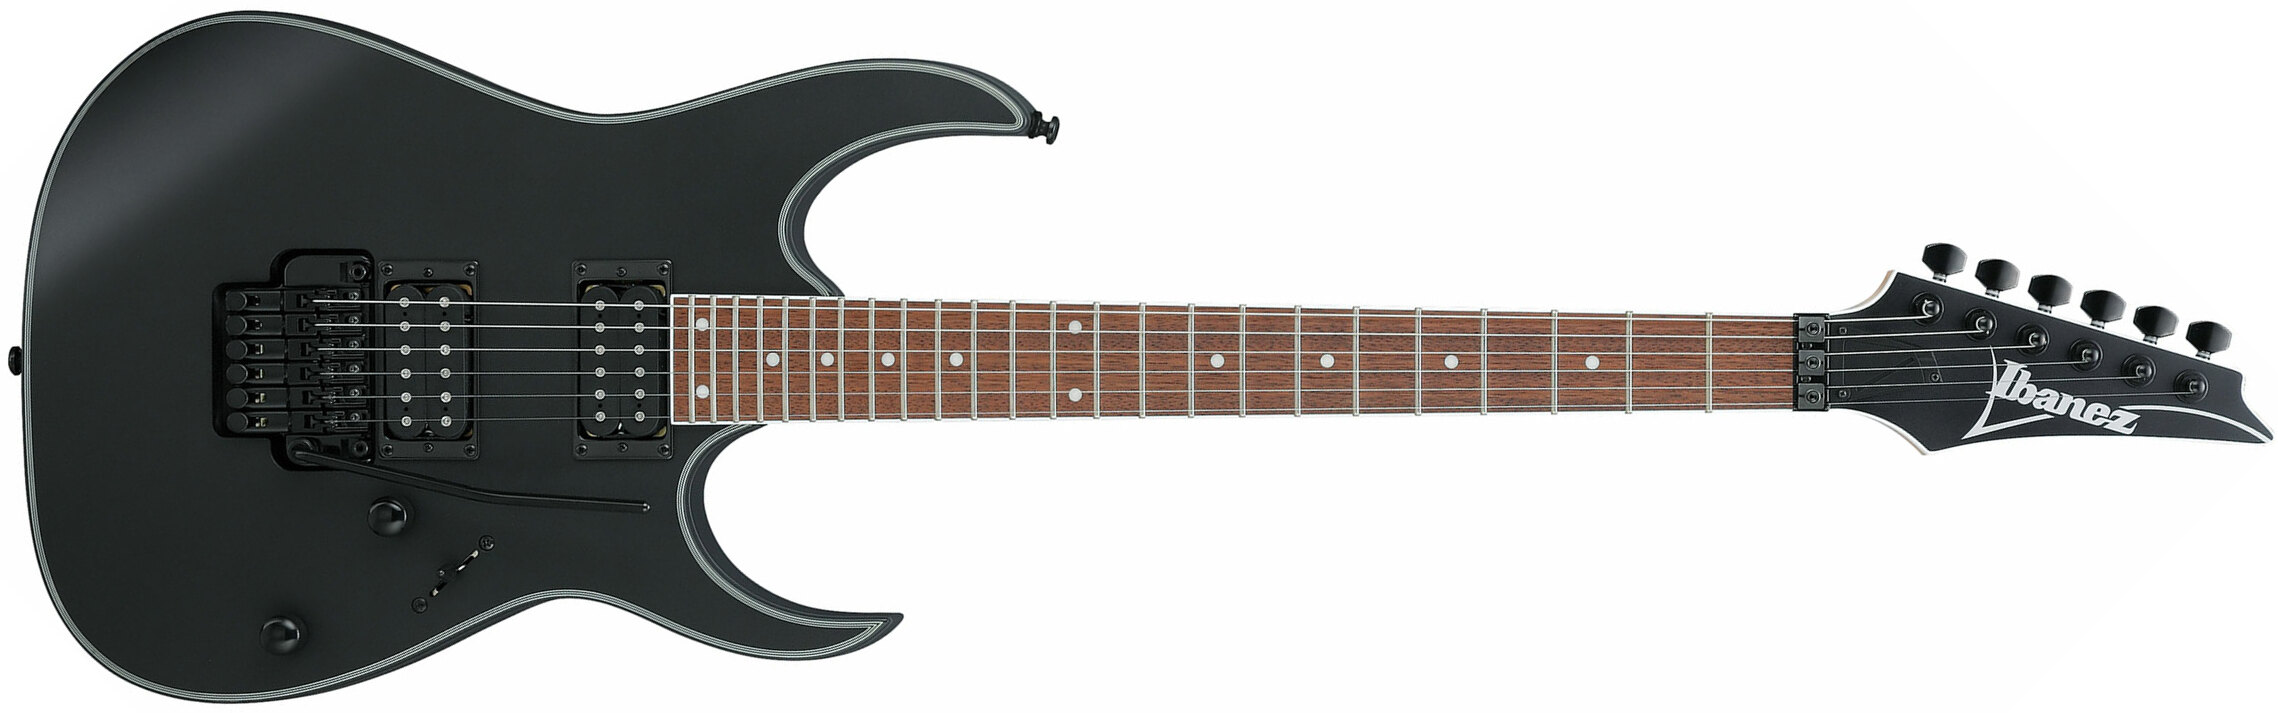 Ibanez Rg320exz Bkf Standard Fr Hh Jat - Black Flat - Guitarra eléctrica con forma de str. - Main picture